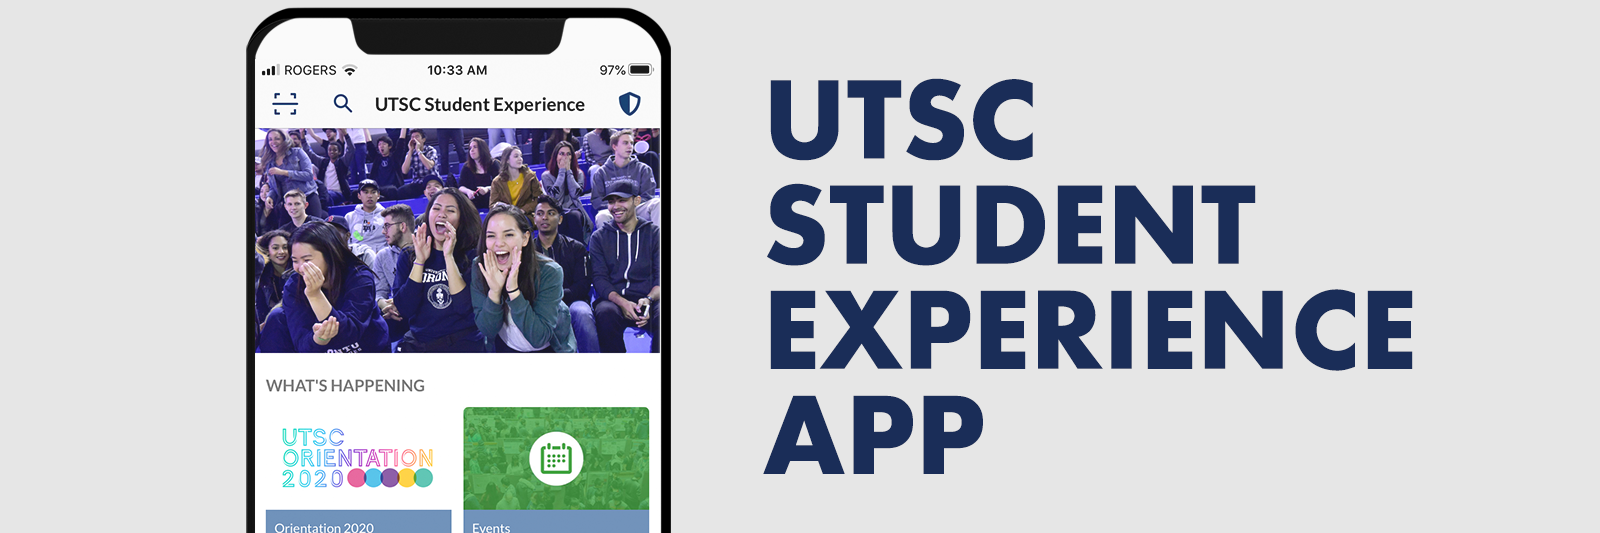 UTSC Student Experience App